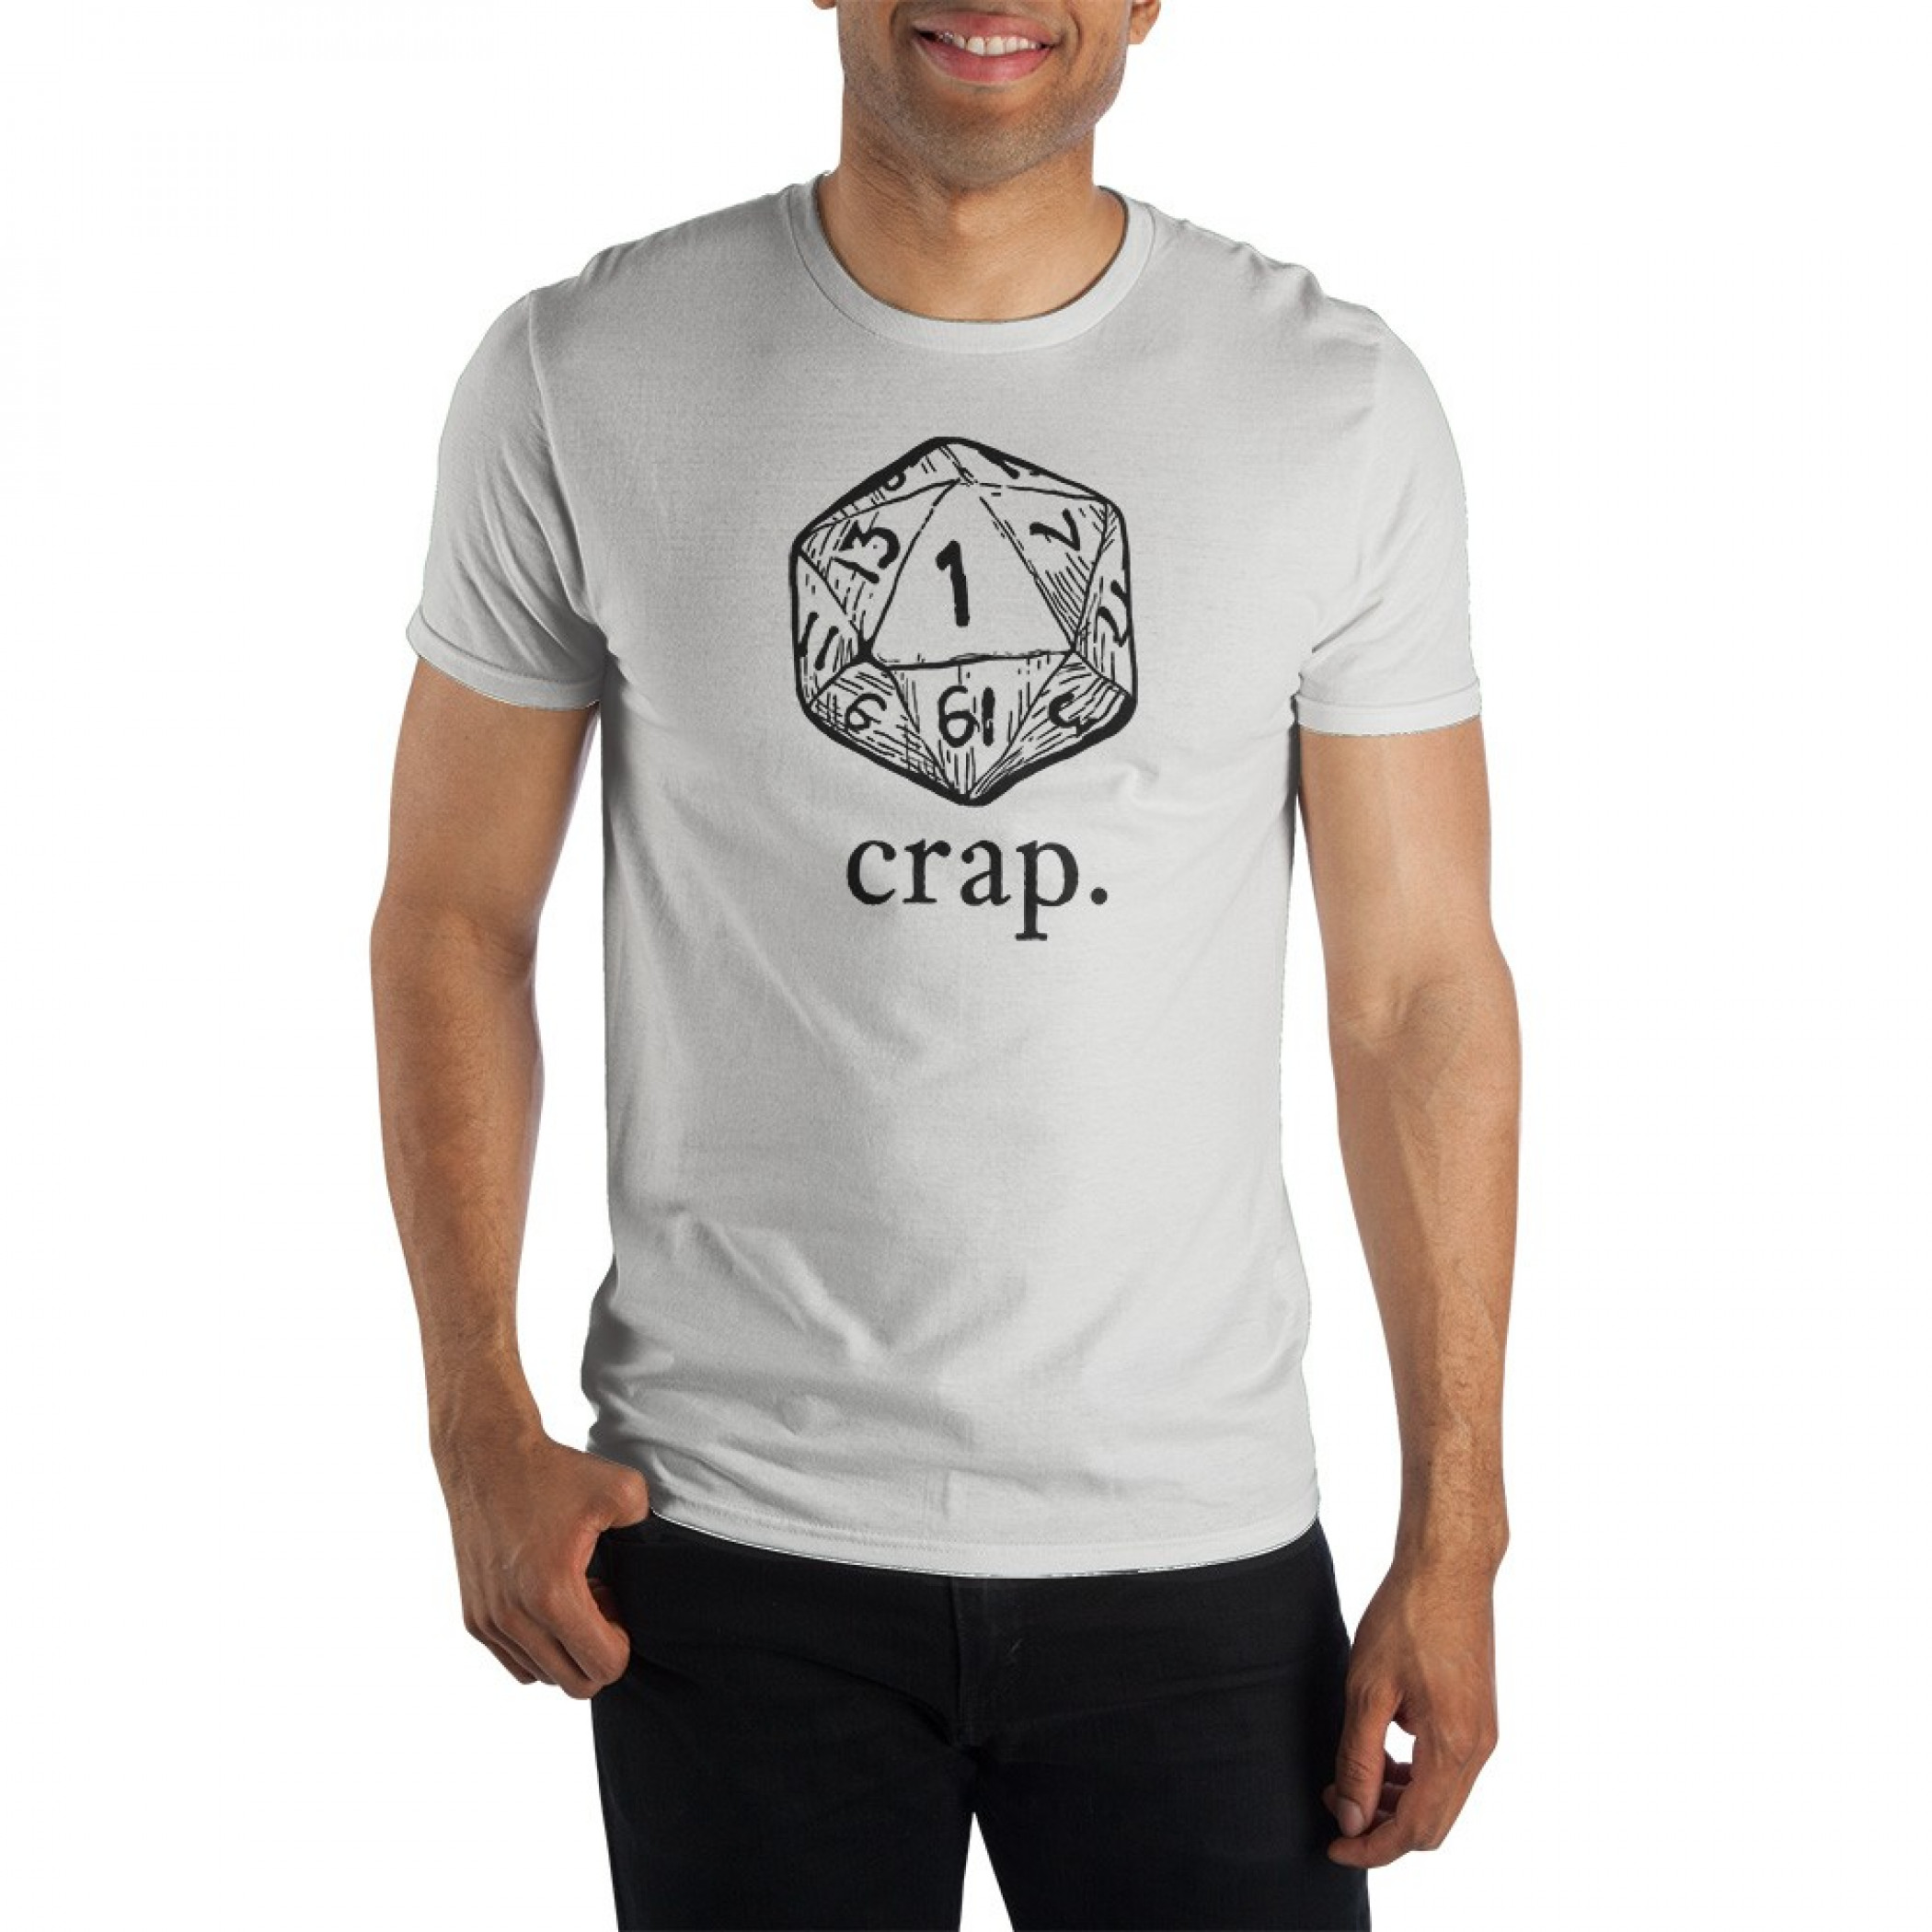 Carpe DM T-Shirt, Dungeons and Dragons